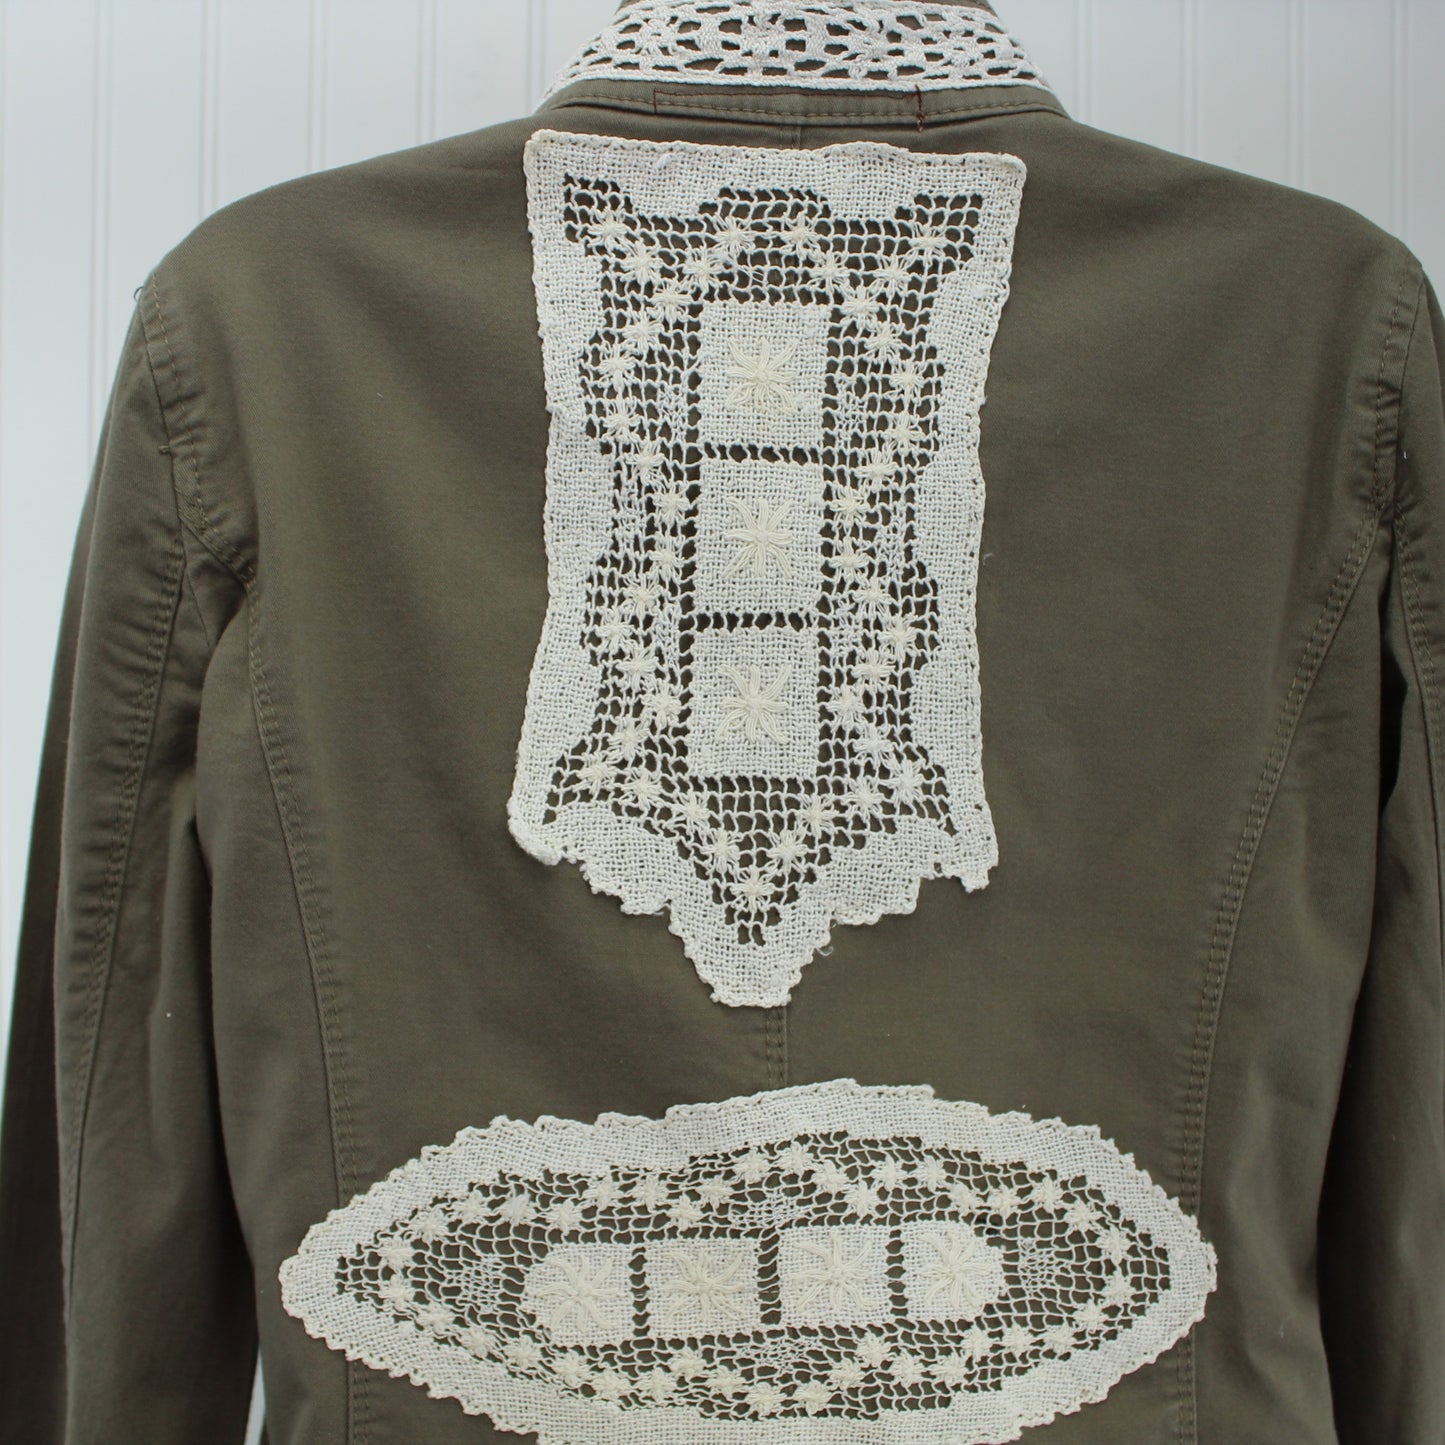 Express Cotton Jacket Mandarin Collar Enhanced Patzi Design Lace Doily Repurposed closeup of lacy doilies on jacket back